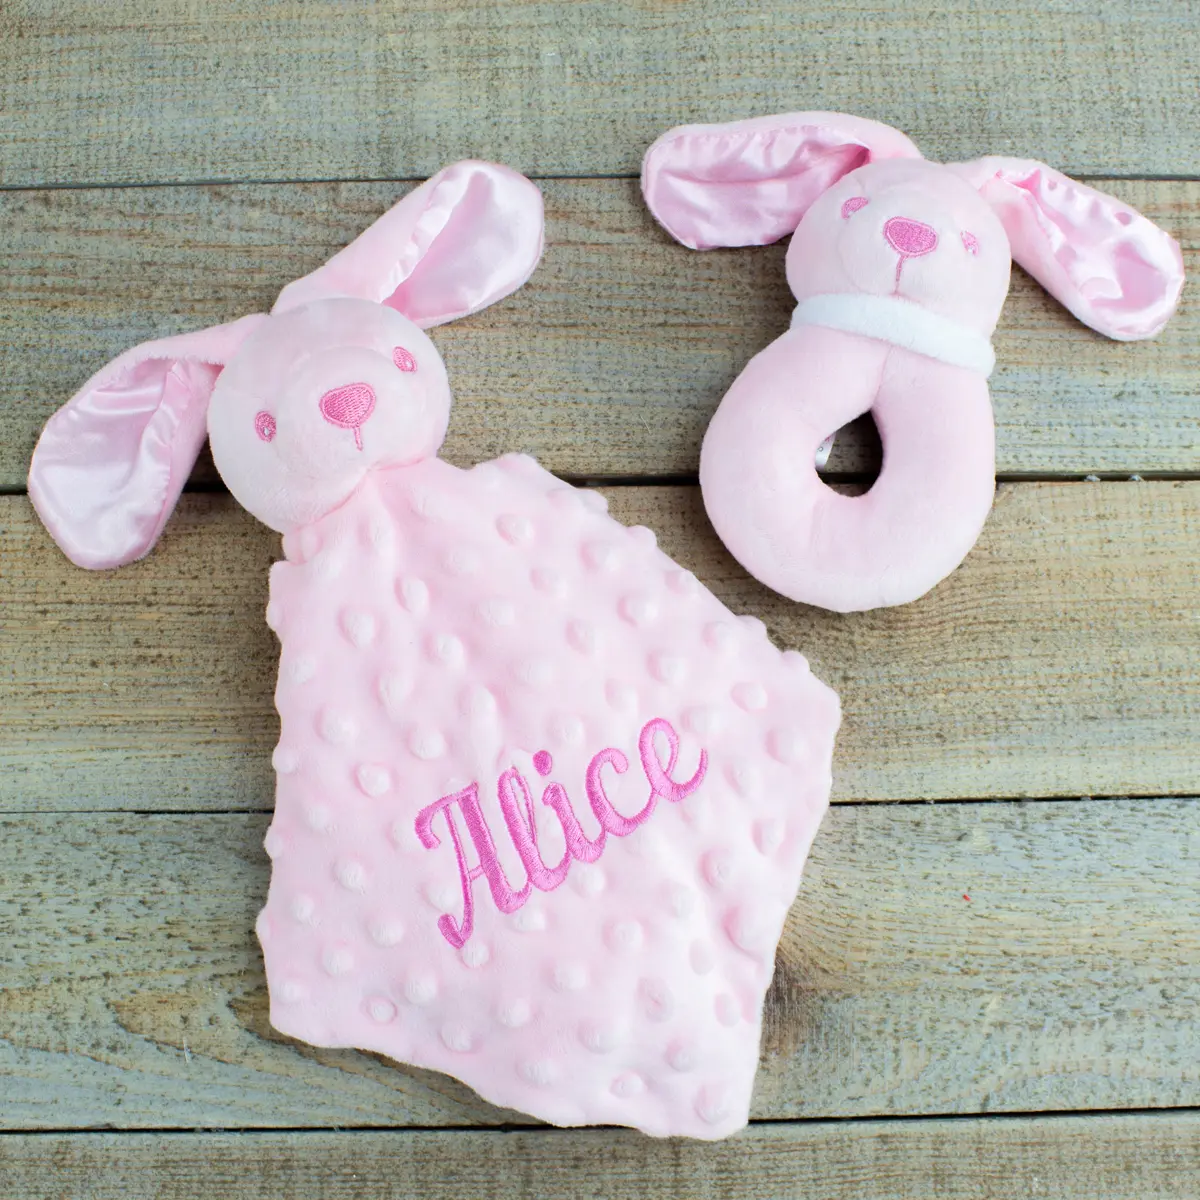 Personalised Pink Bunny Rabbit Gift Hamper - Comforter & Rattle